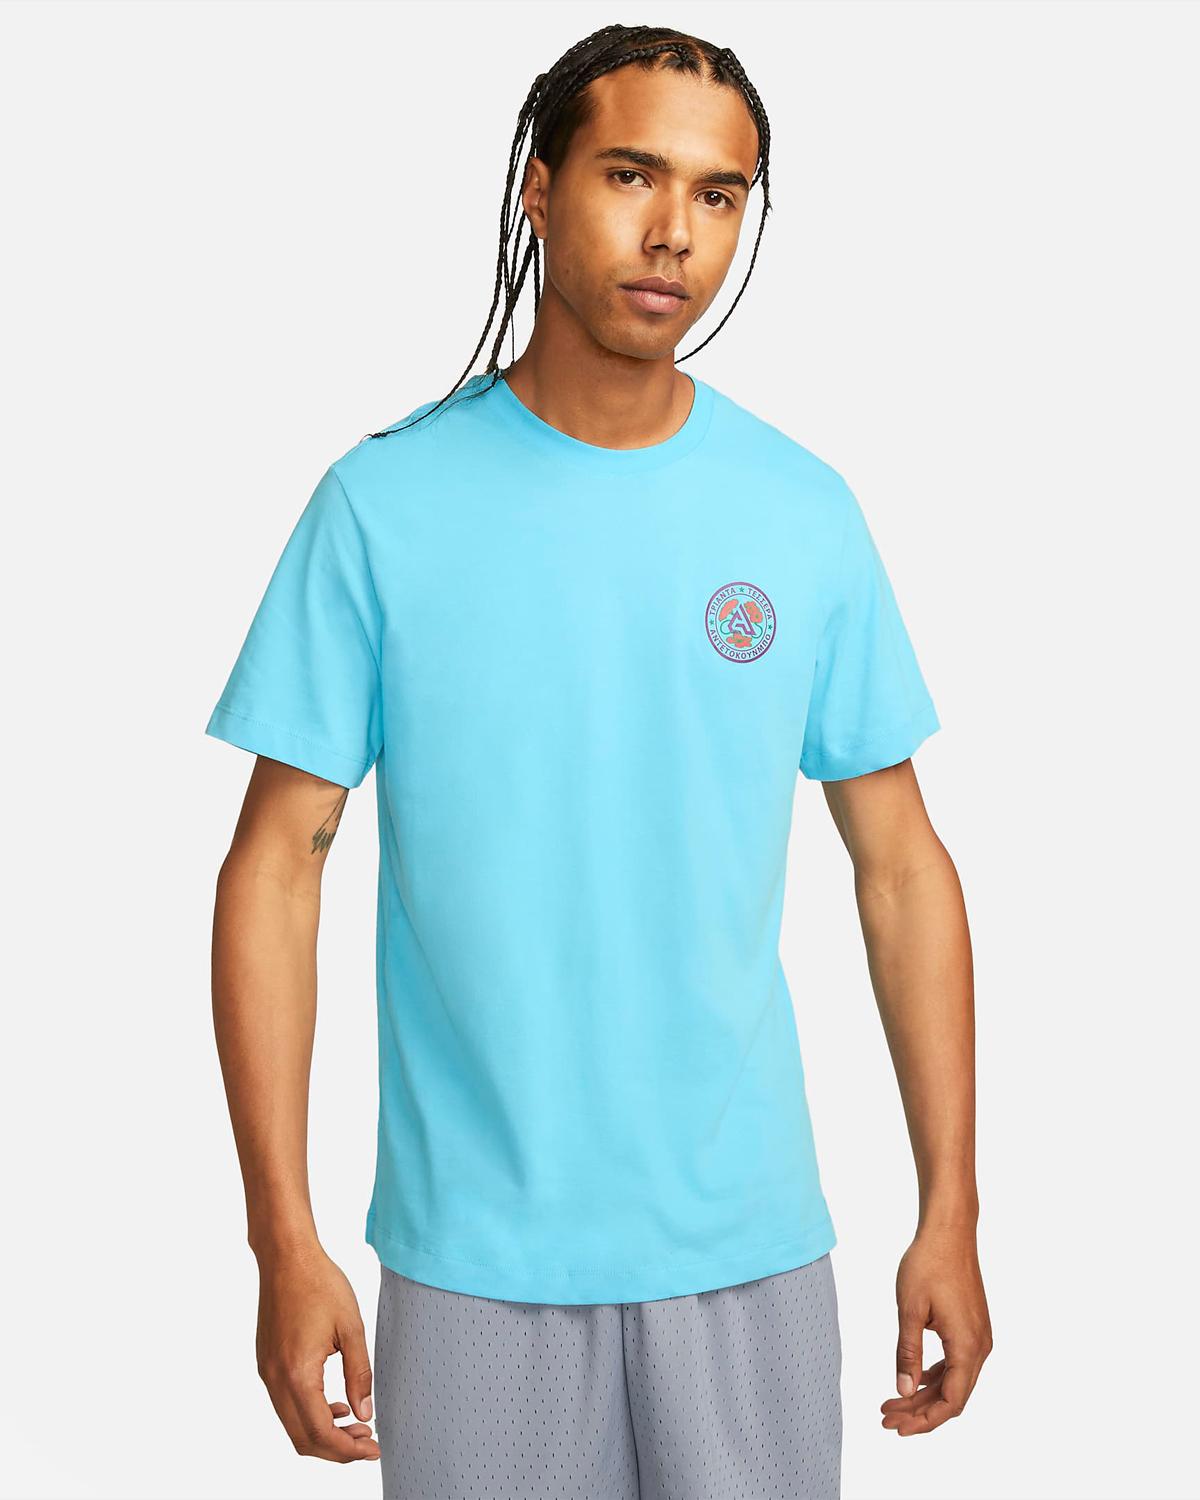 Nike-Freak-5-Giannis-T-Shirt-Baltic-Blue-1